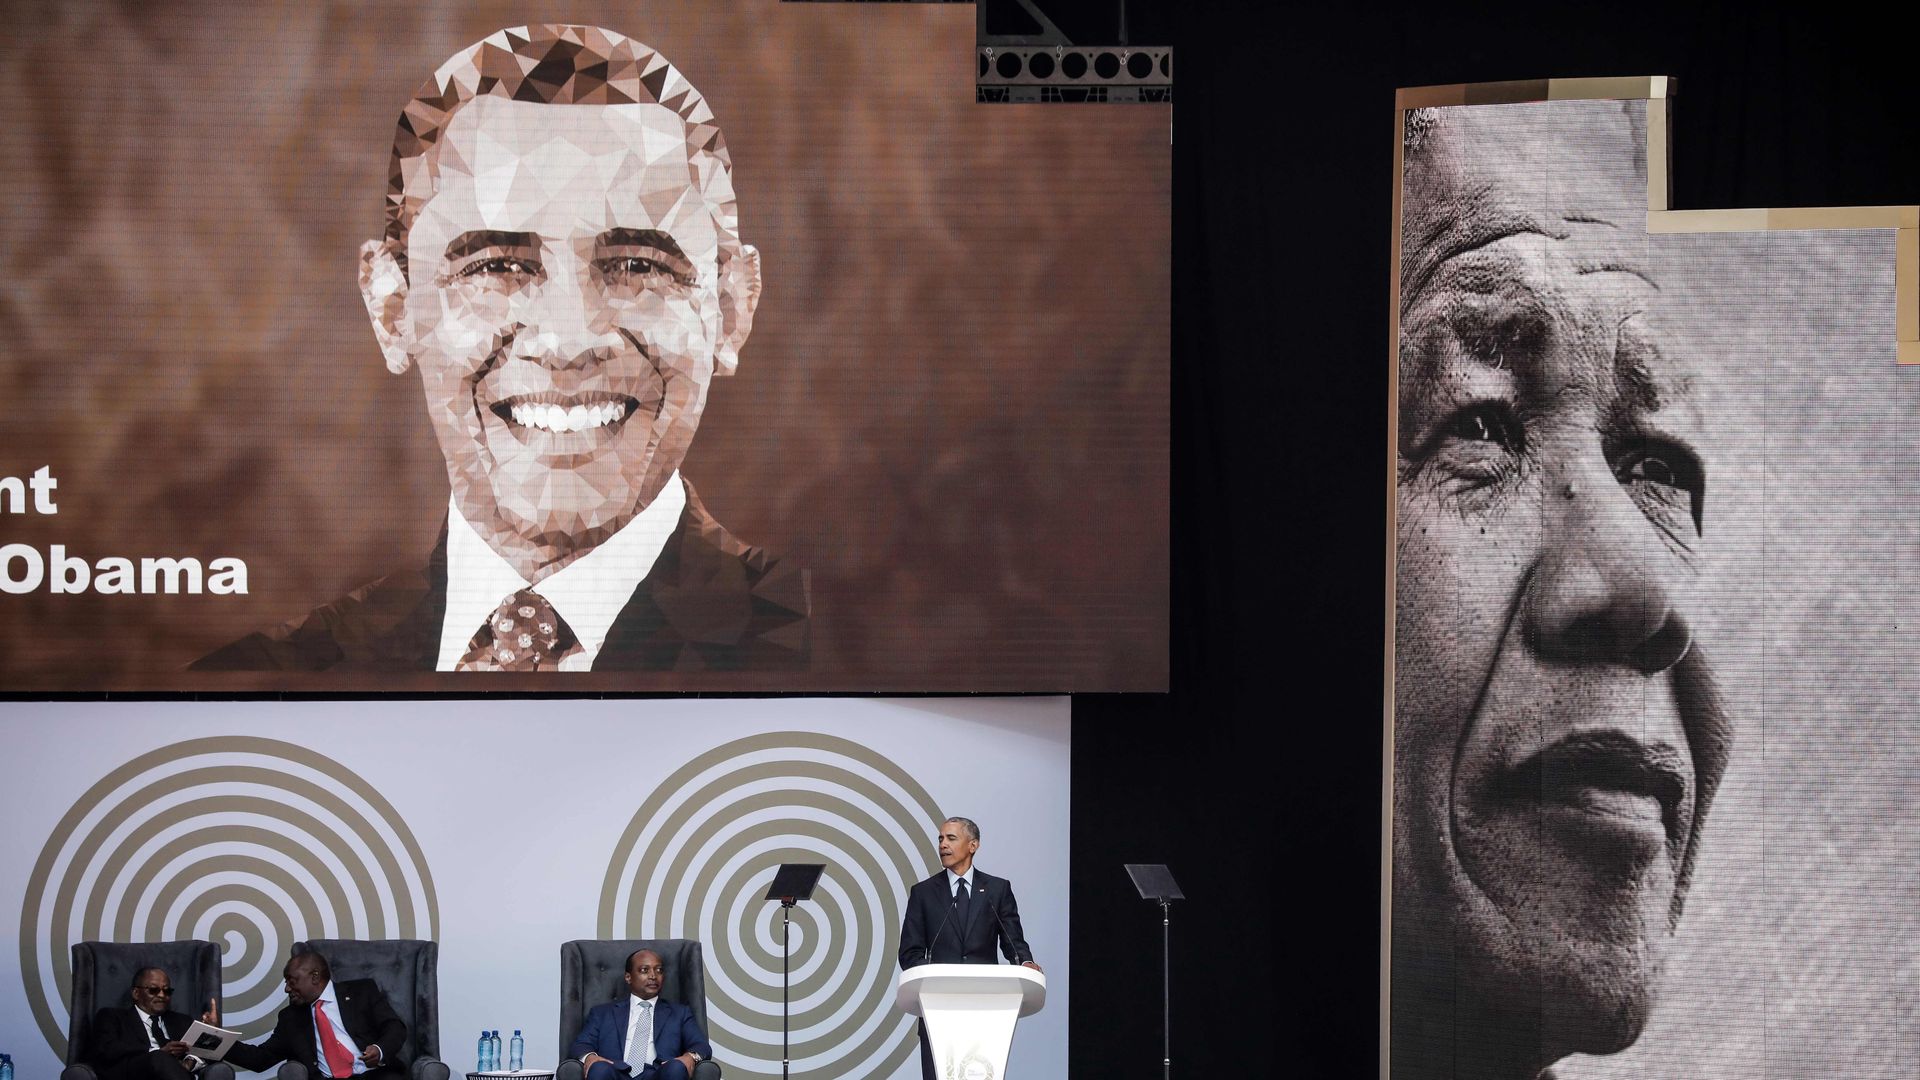 Obama giving a speech on Mandela's 100th birthday